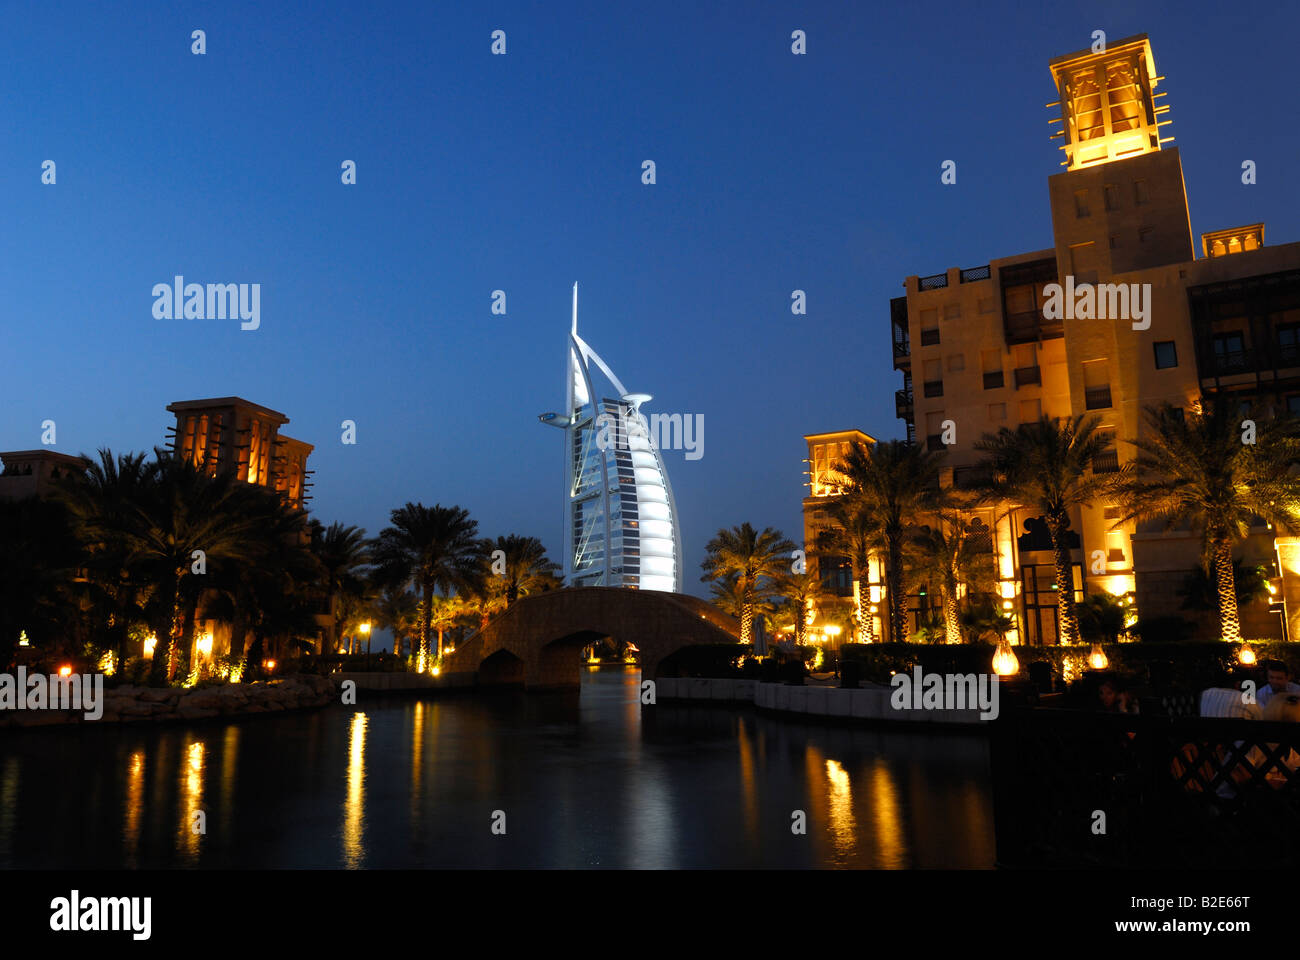 Mina a Salam Hotel at dusk with Burj al Arab Hotel in background Dubai United Arab Emirates Stock Photo